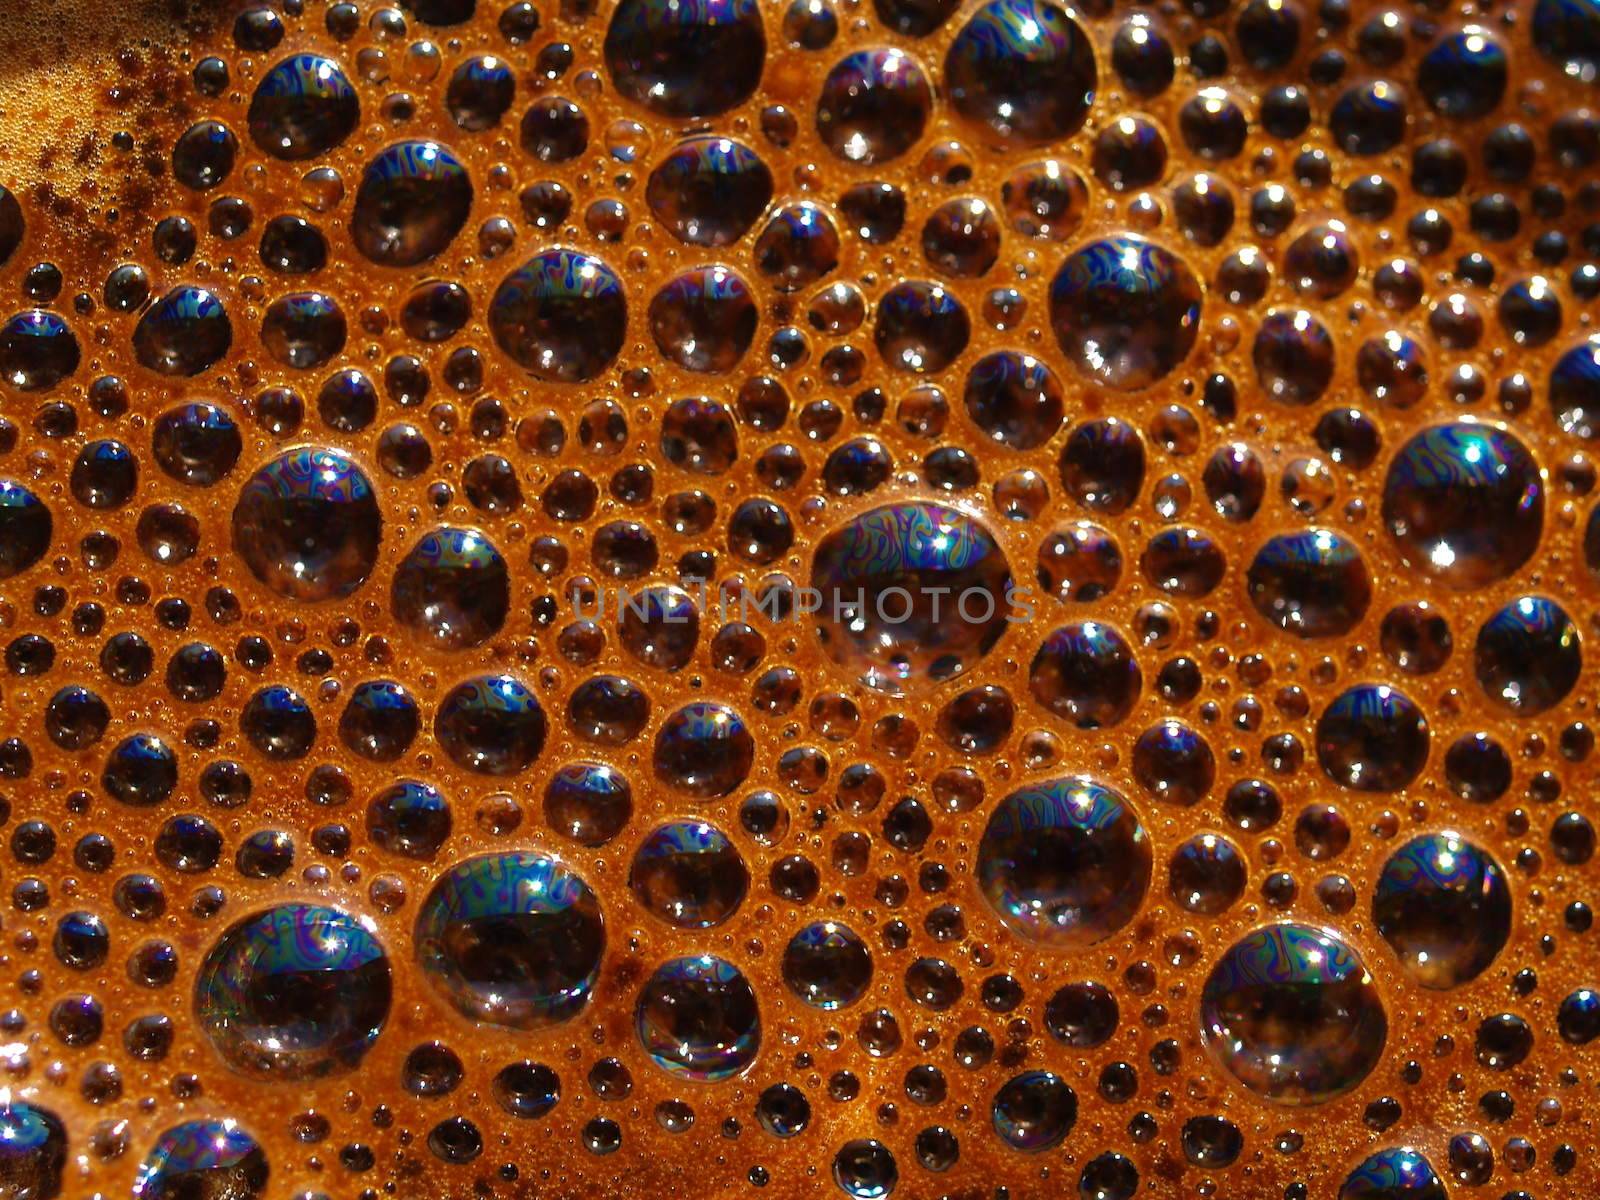 Coffee Froth Bubbles by Frankljunior